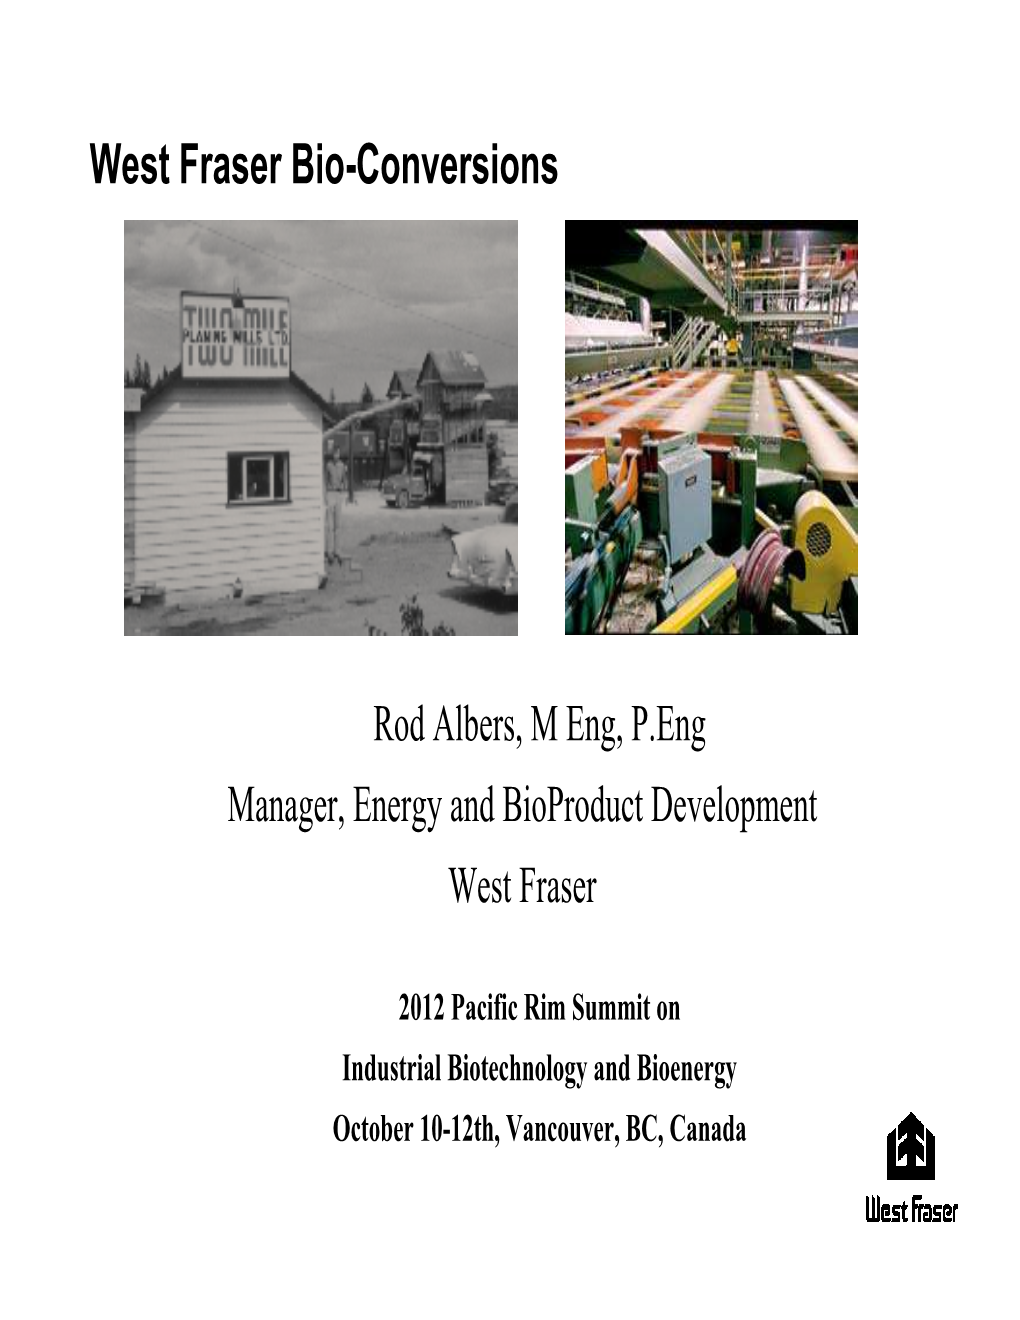 About West Fraser